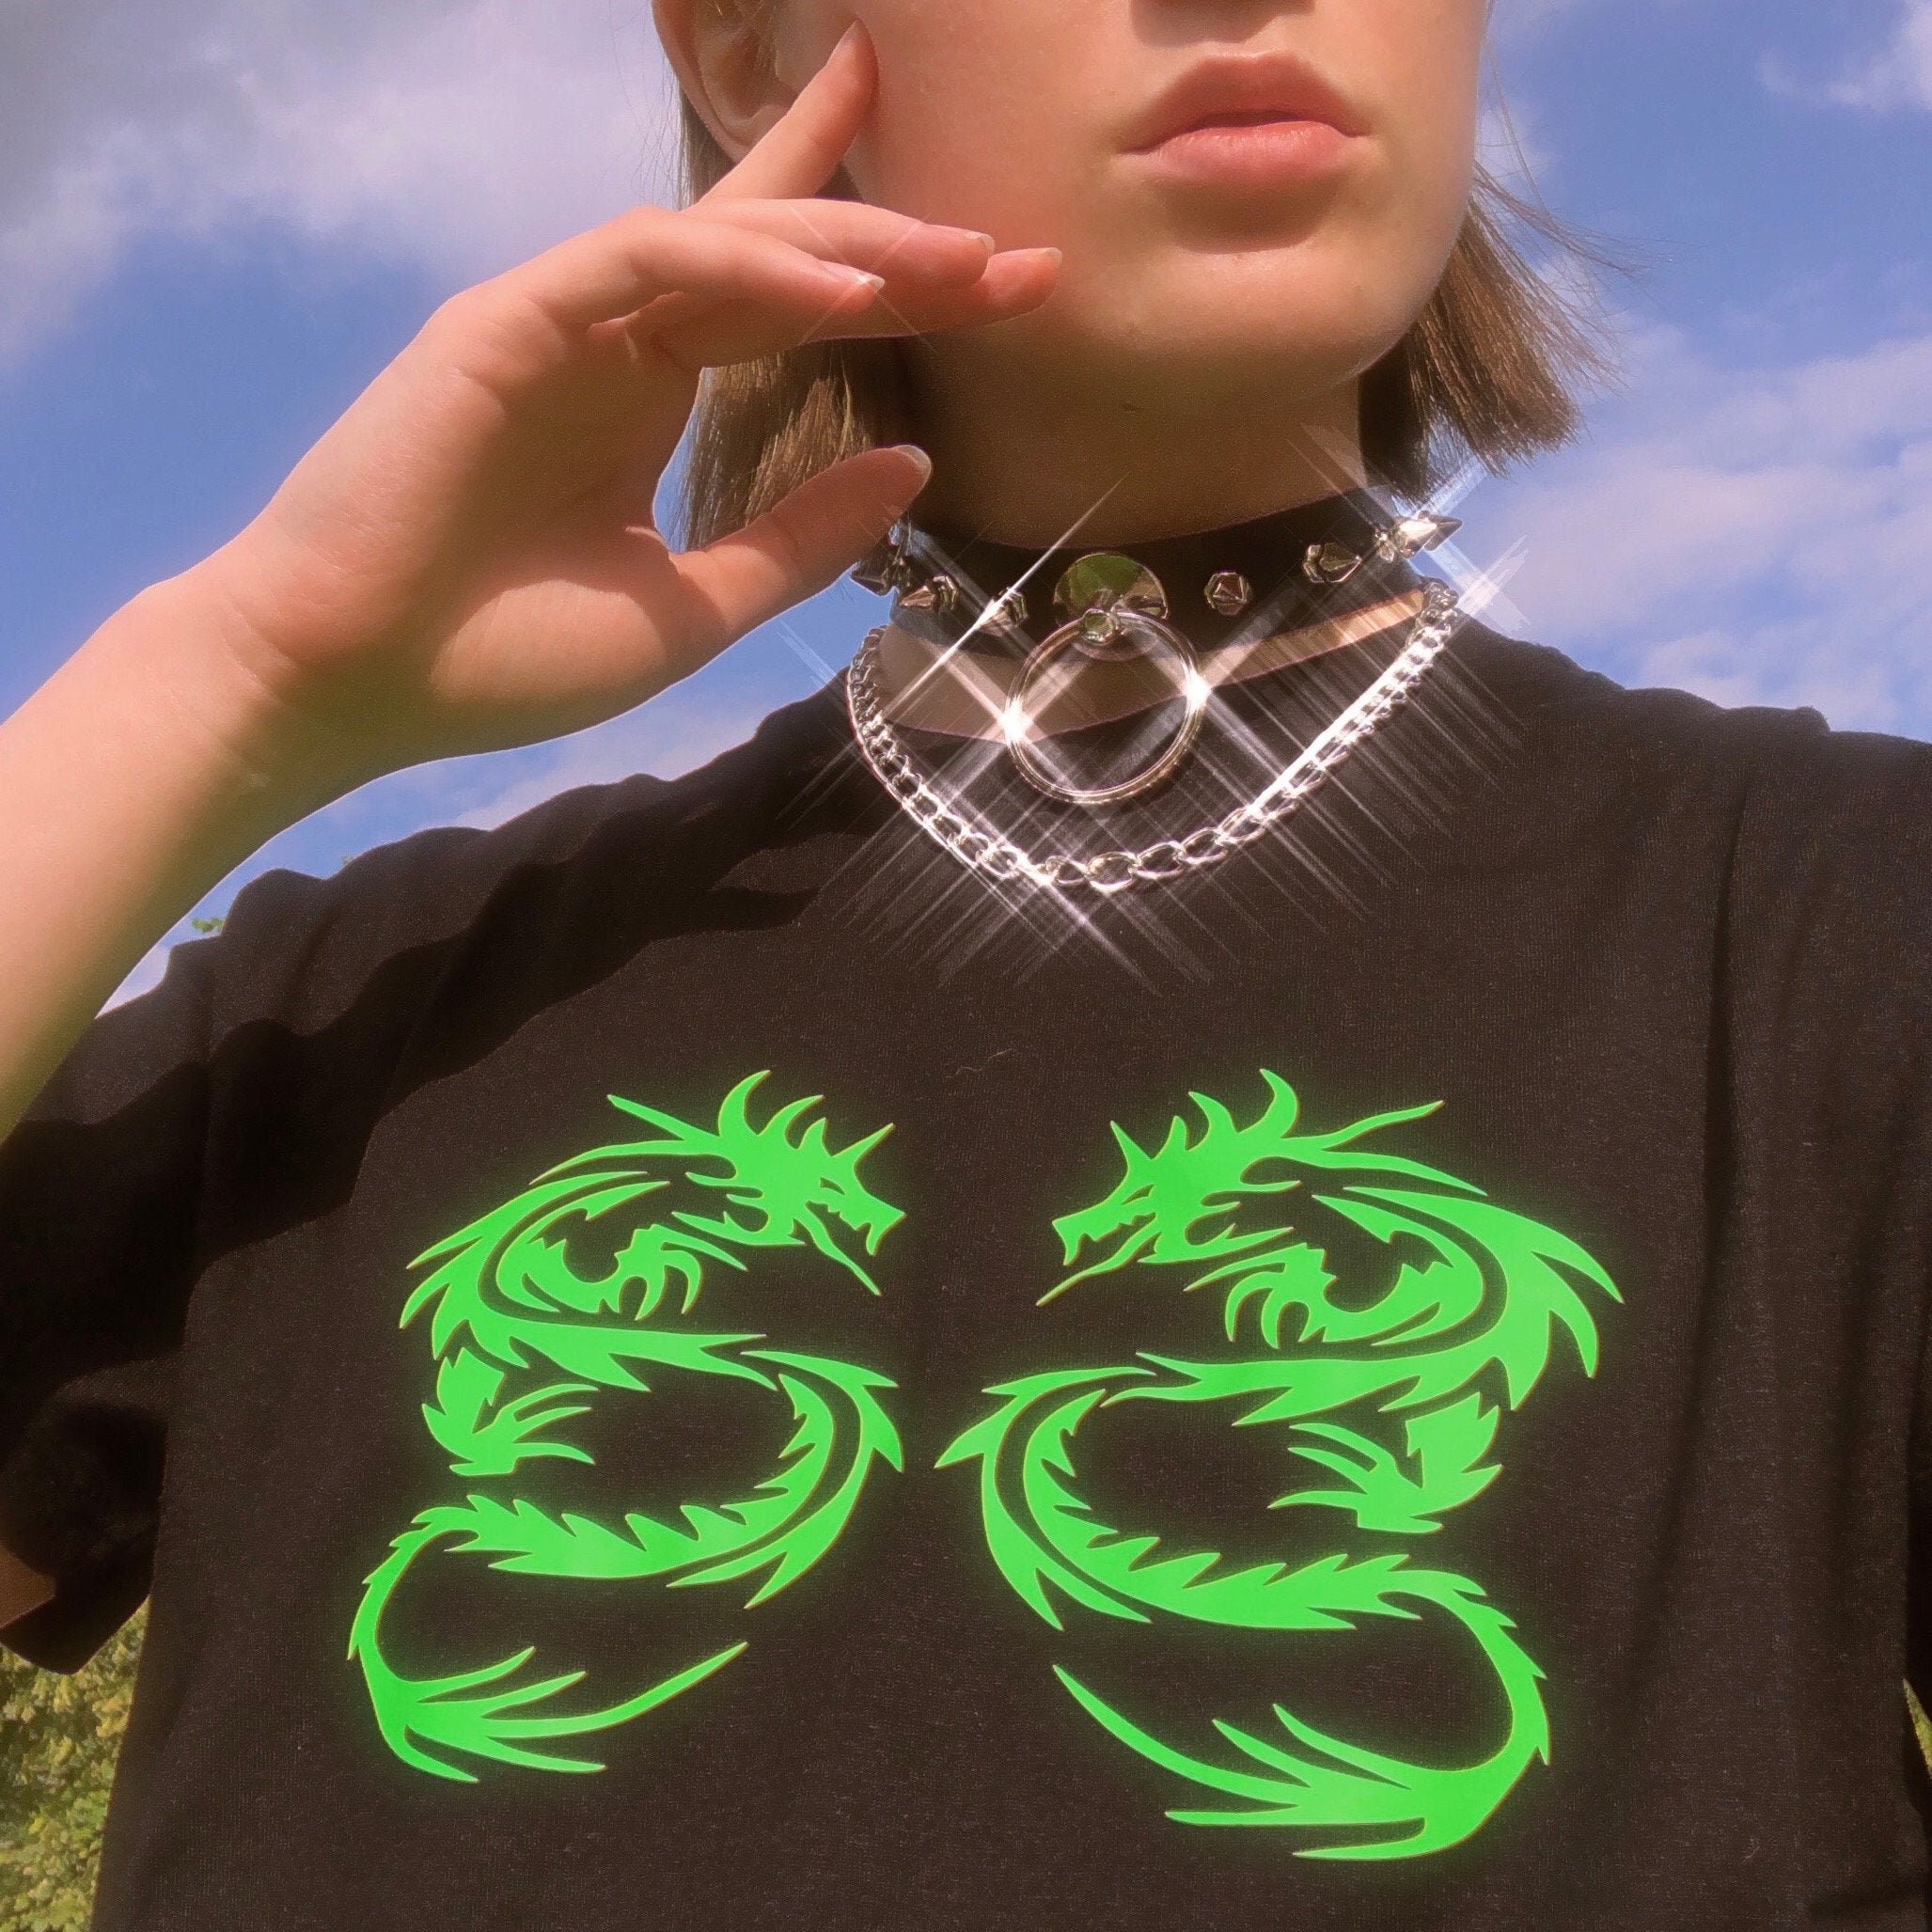 New Era-inspired black t-shirt, “Neon Green graphic design